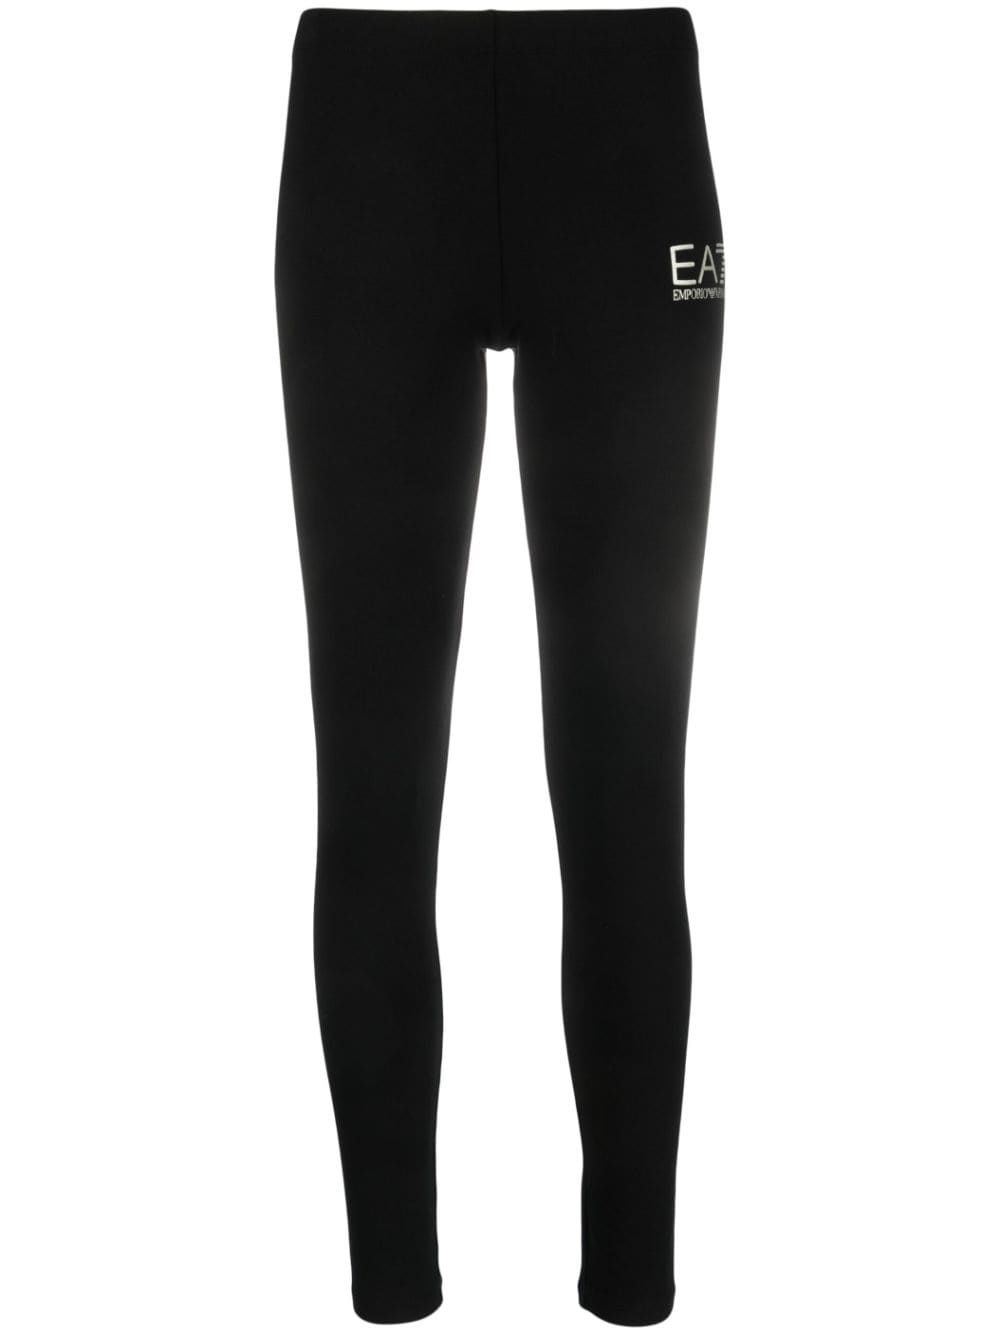 ea7 emporio armani legging à logo imprimé - noir